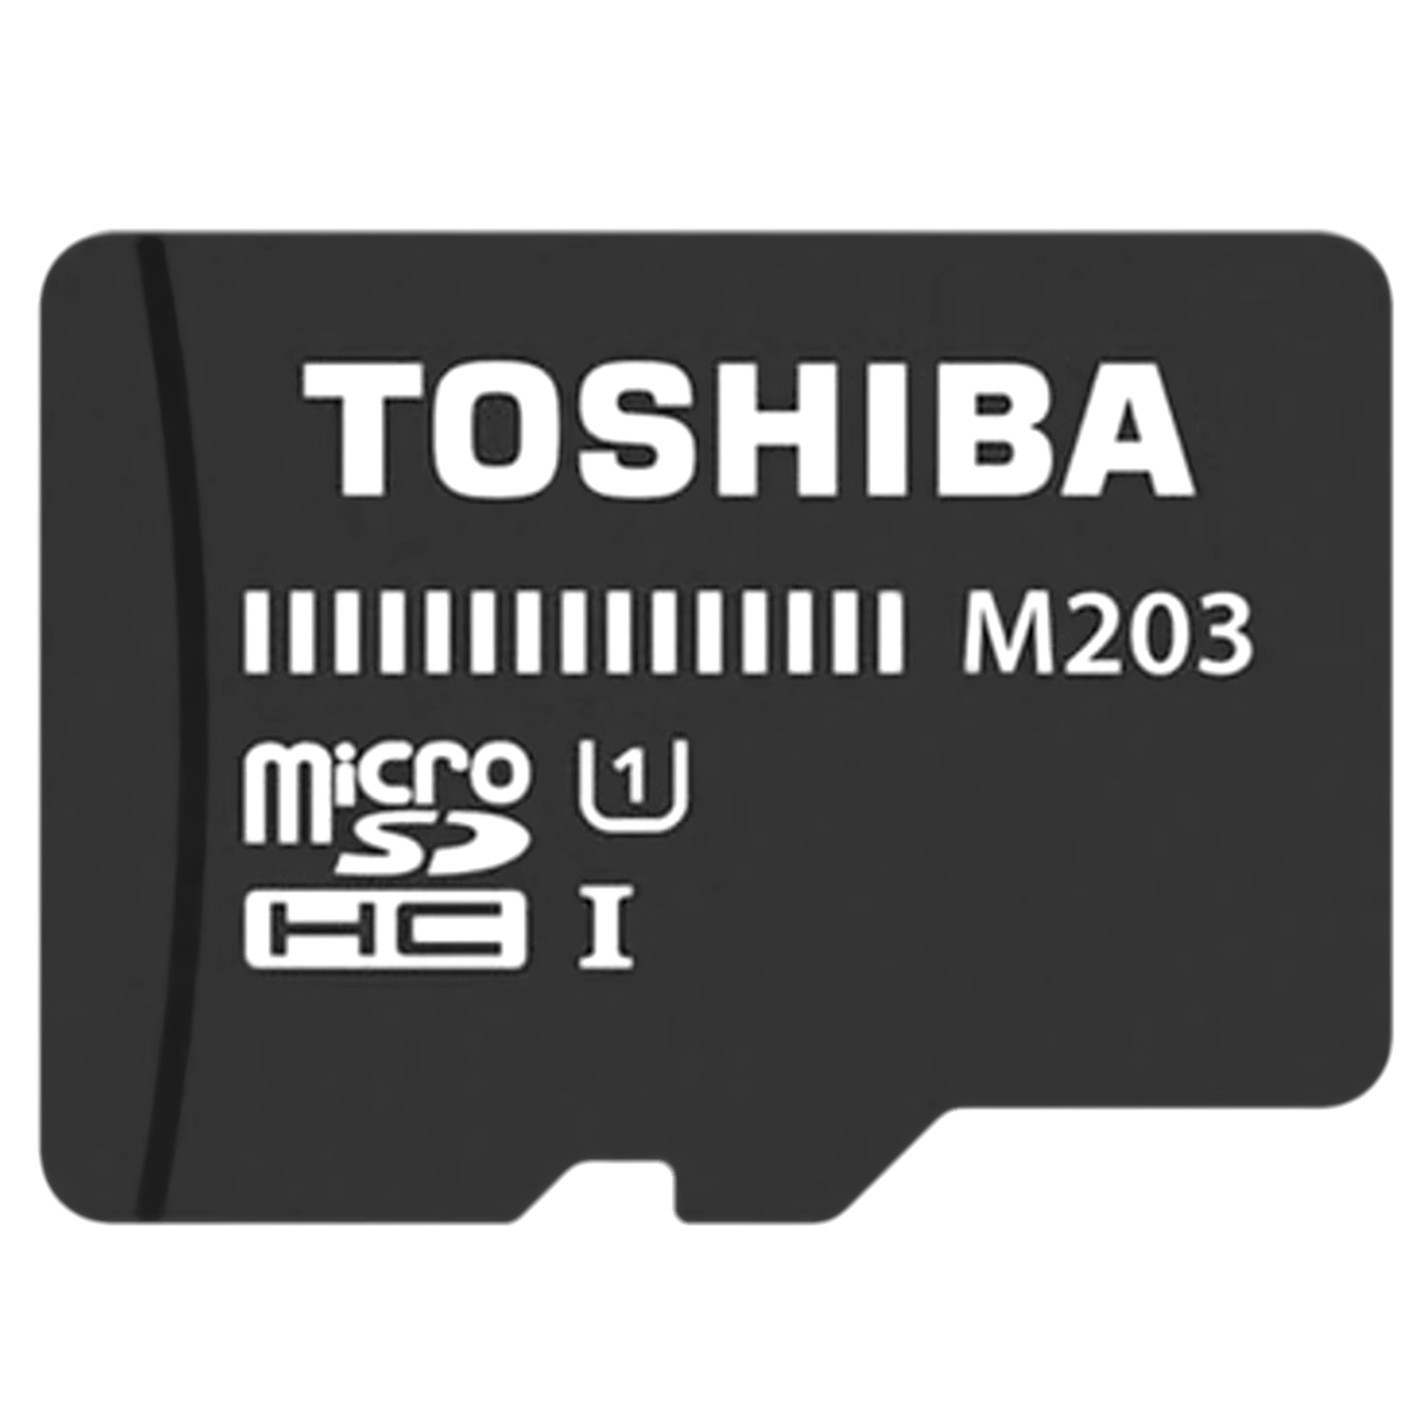 Toshiba M203, 32 GB, microSDXC Clase 10 memoria flash Tarjeta de memoria